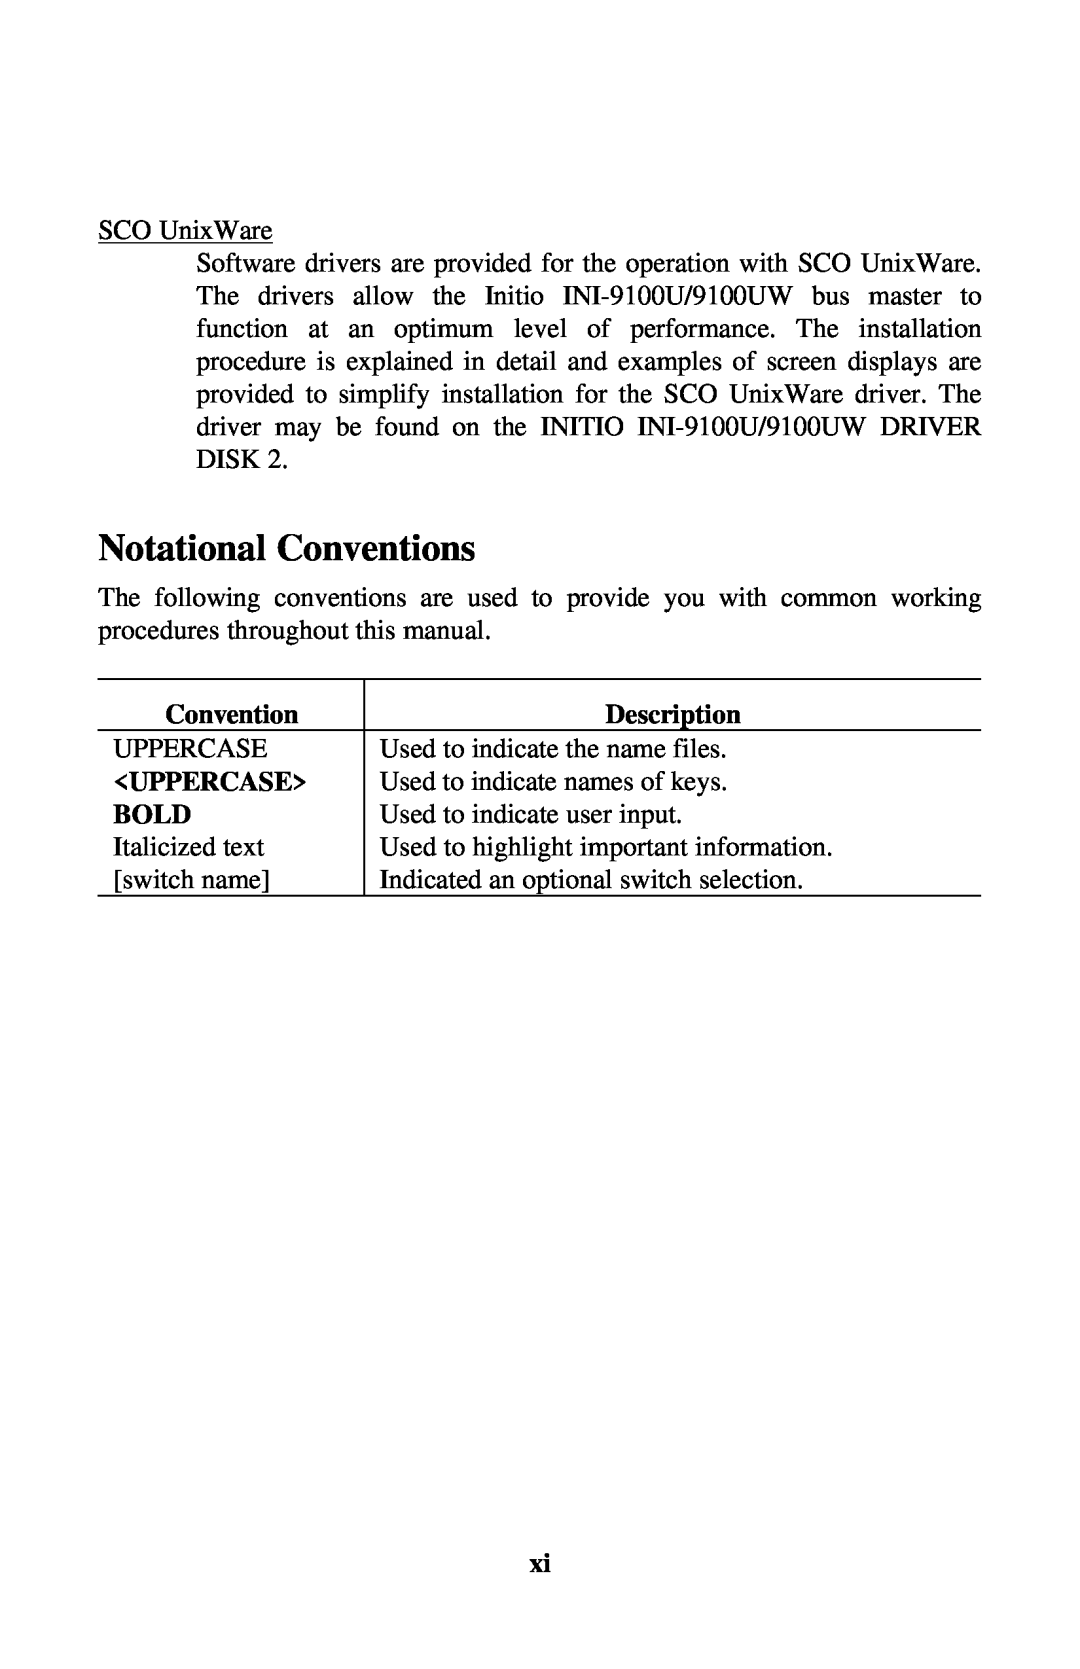 Initio INI-9100UW user manual Notational Conventions, Description, Uppercase, Bold 